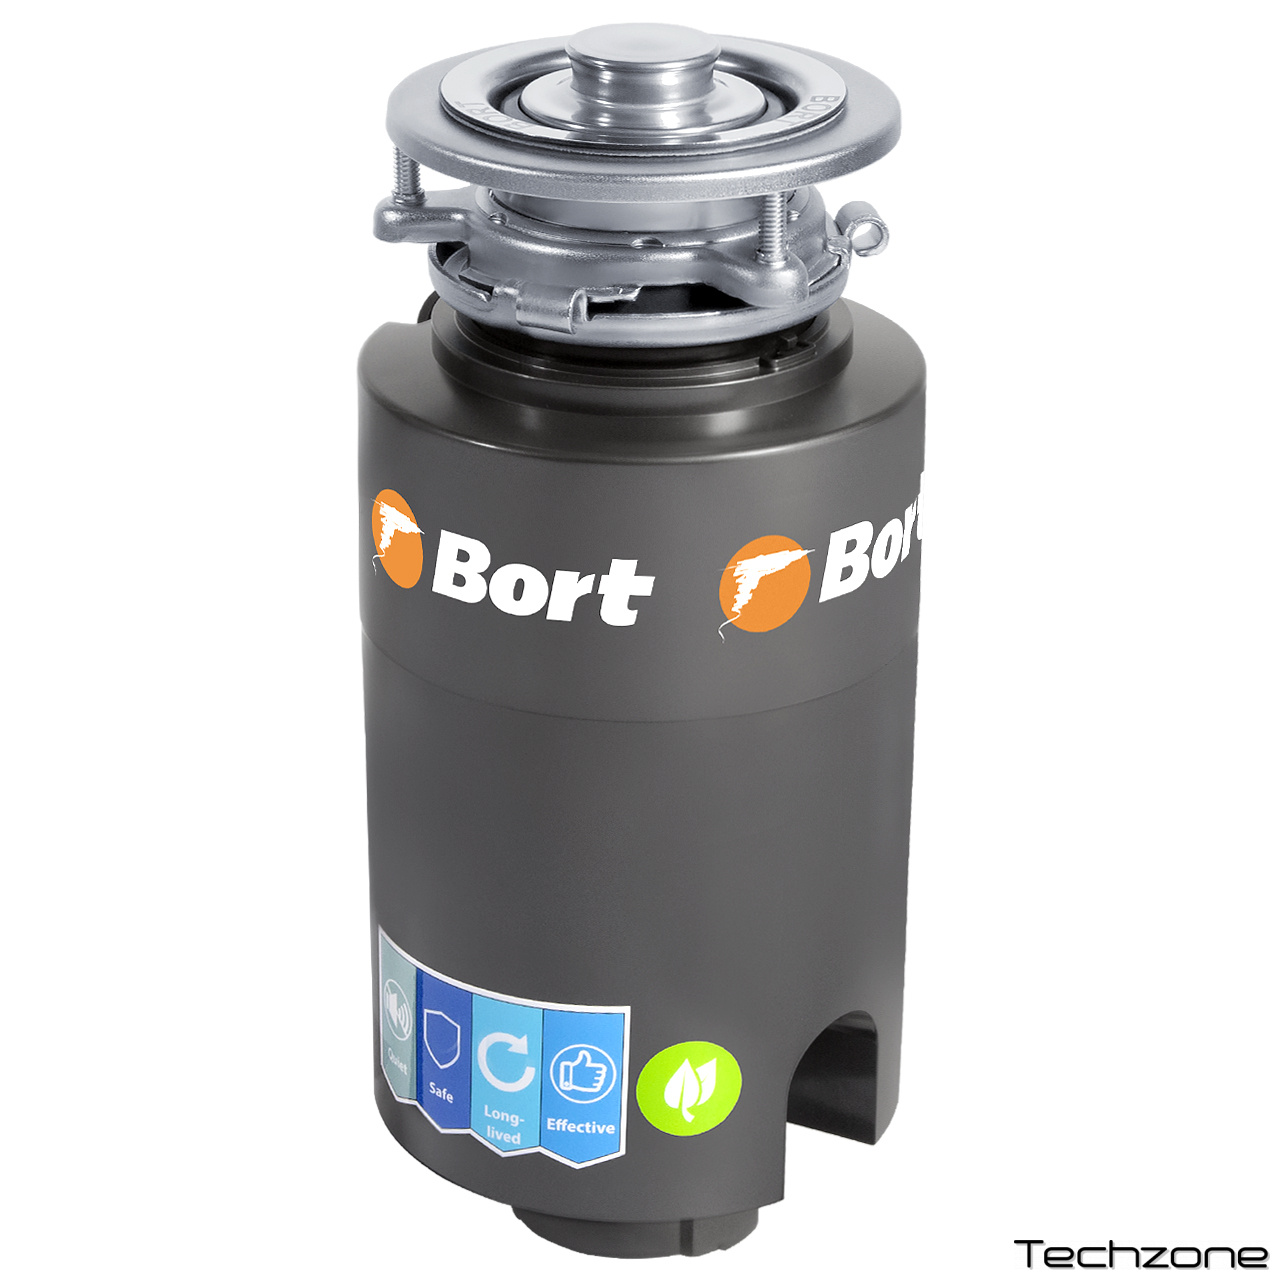  пищевых отходов Bort Titan 4000 Control -  в е .